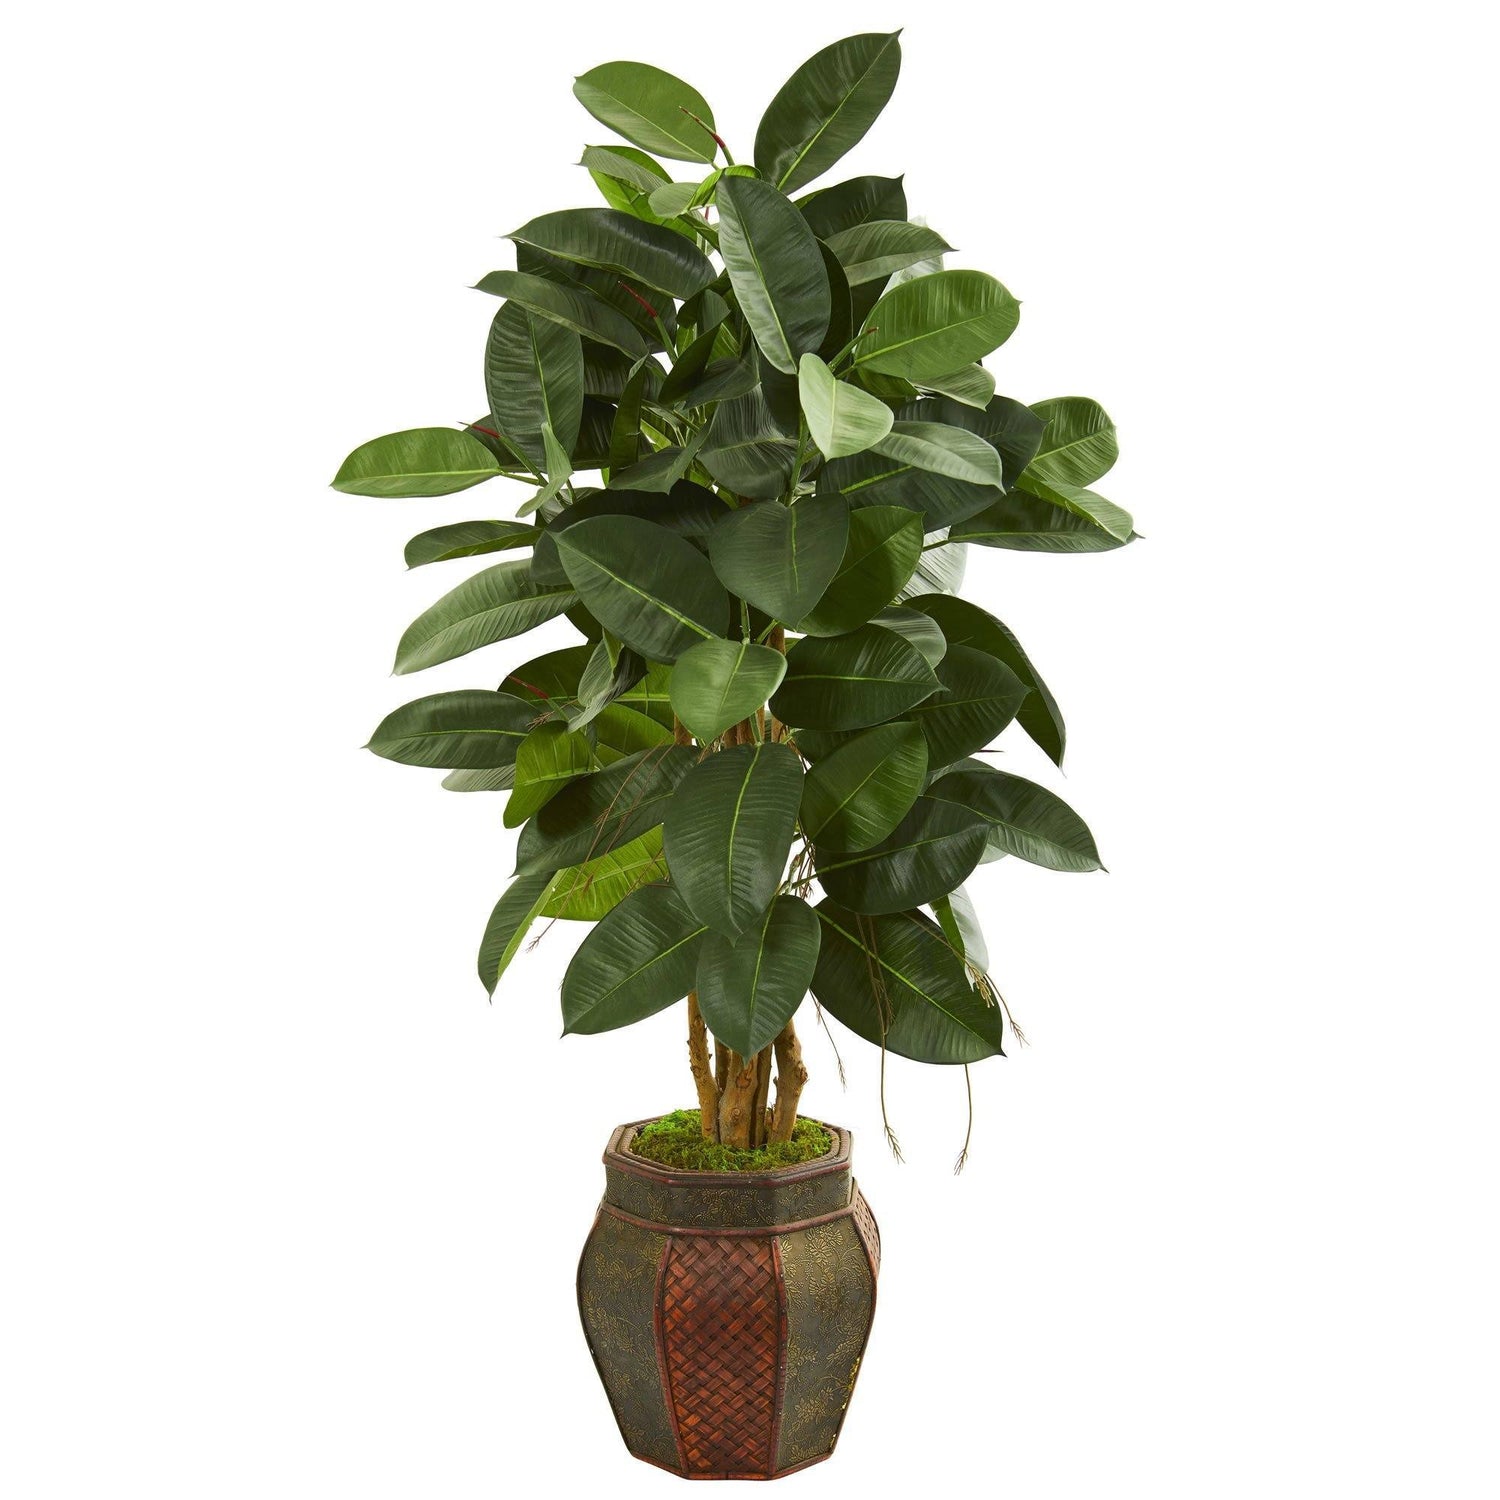 52” Rubber Leaf Artificial Tree in Decorative Planter